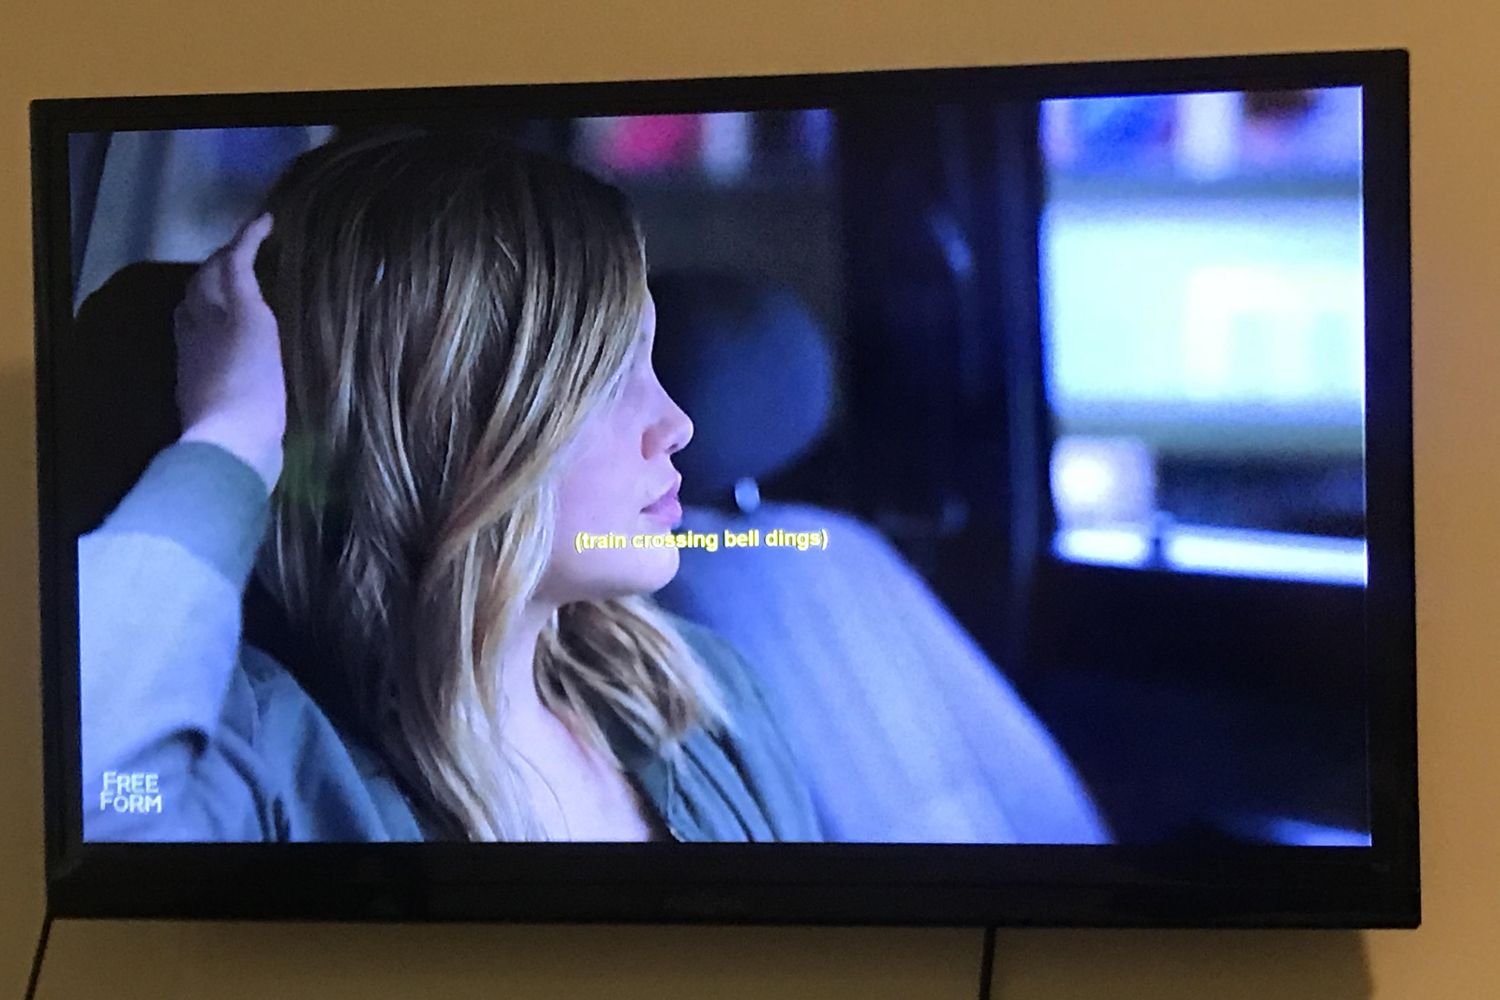 How To Turn Subtitles On Hulu Smart TV